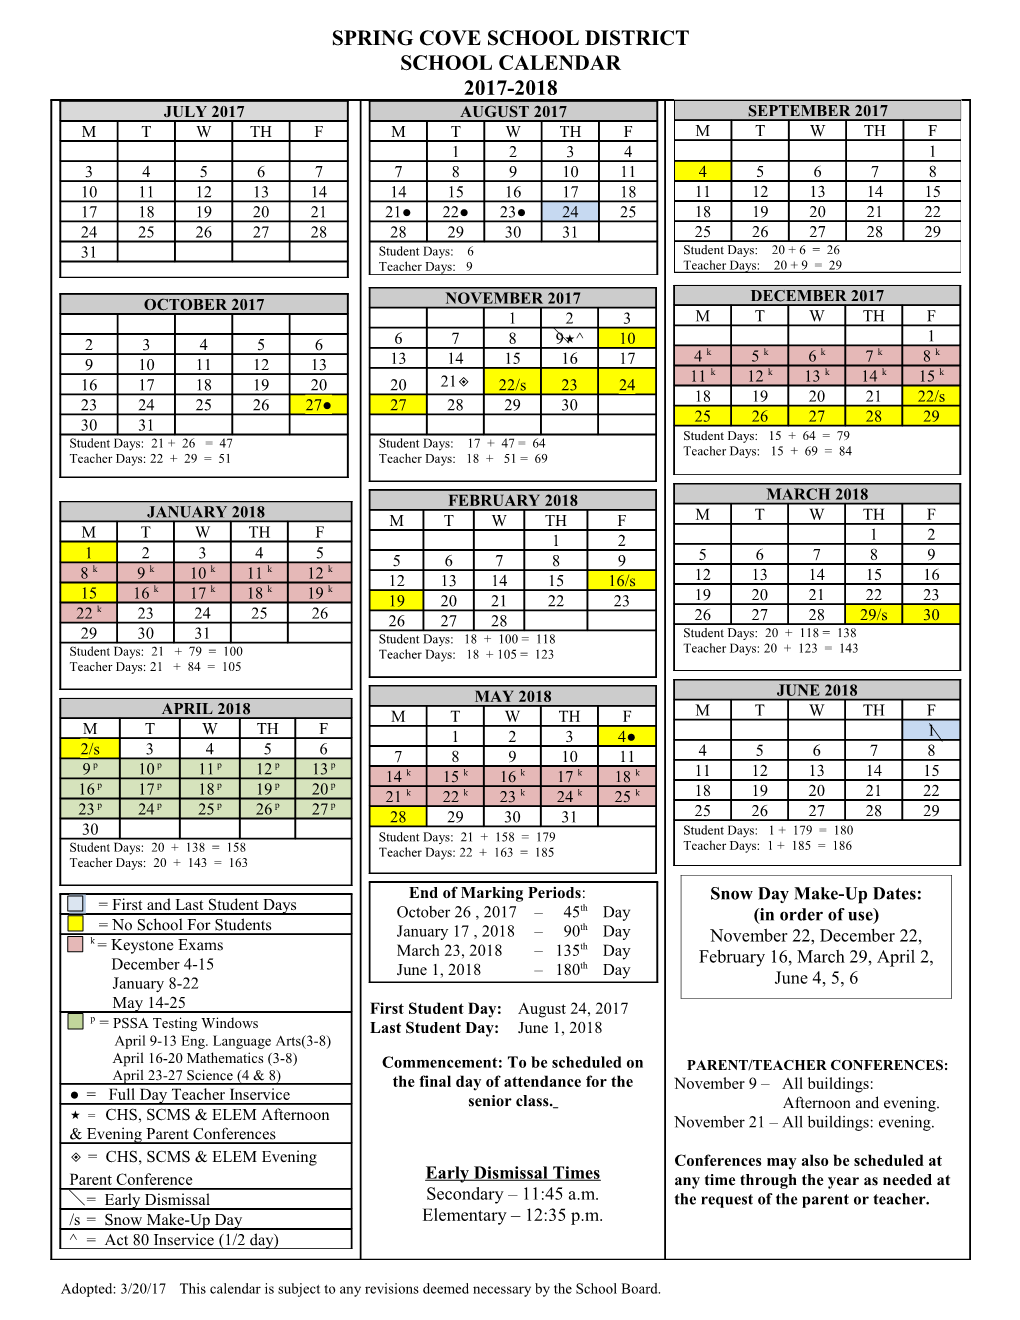 Spring Cove School District 2017-18 School Calendar